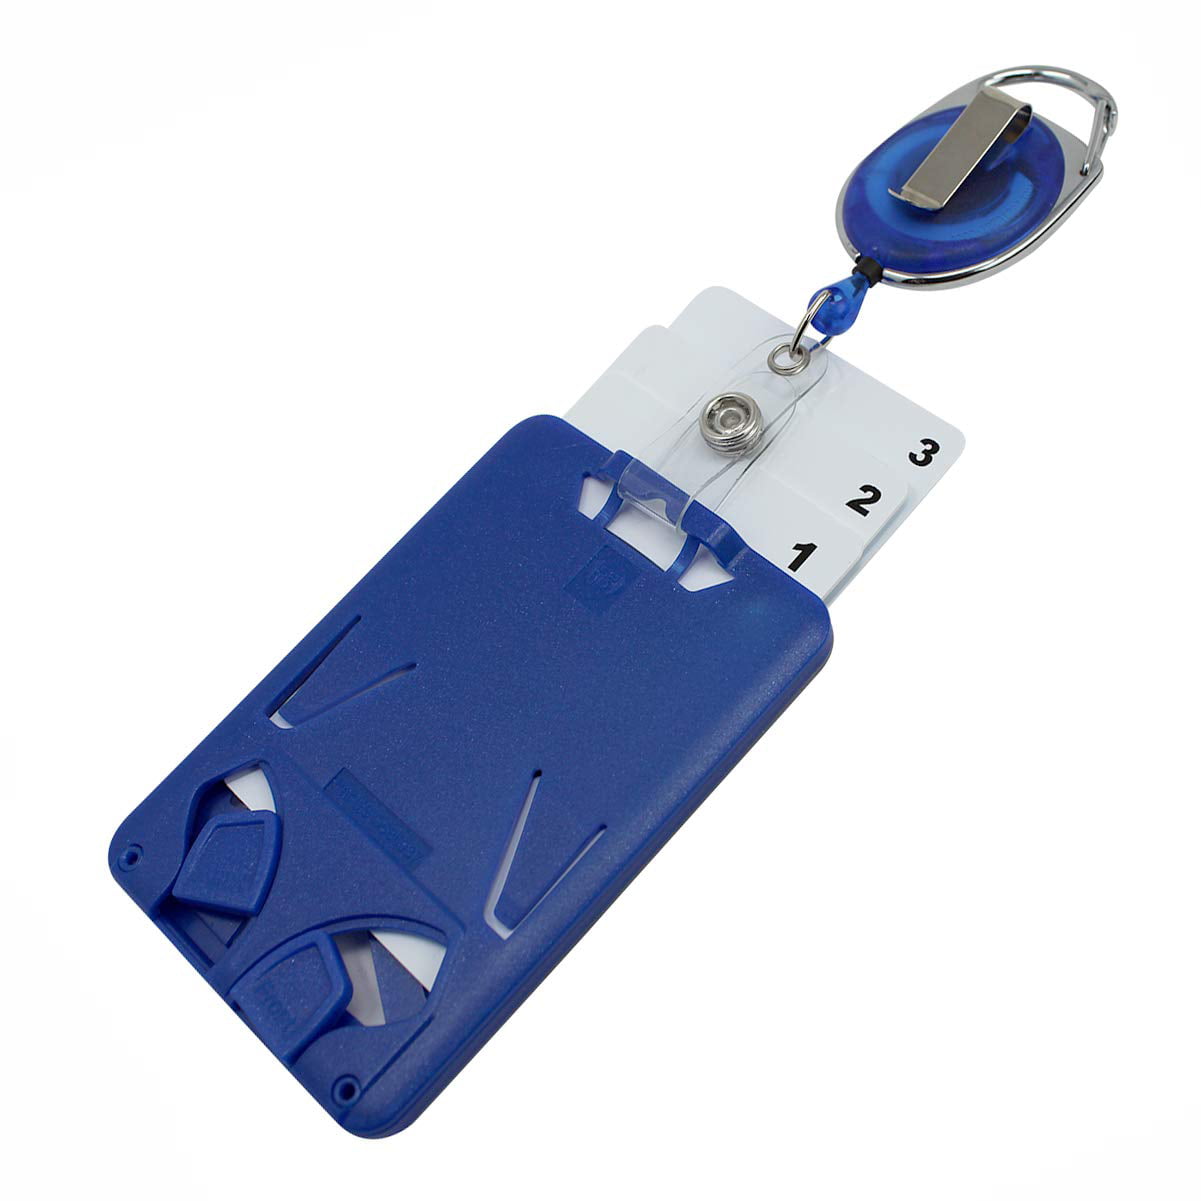 ID Card Case + Heavy Duty Lanyard (Black) + Badge Holder Retractable Reel Carabiner and Plastic Clip